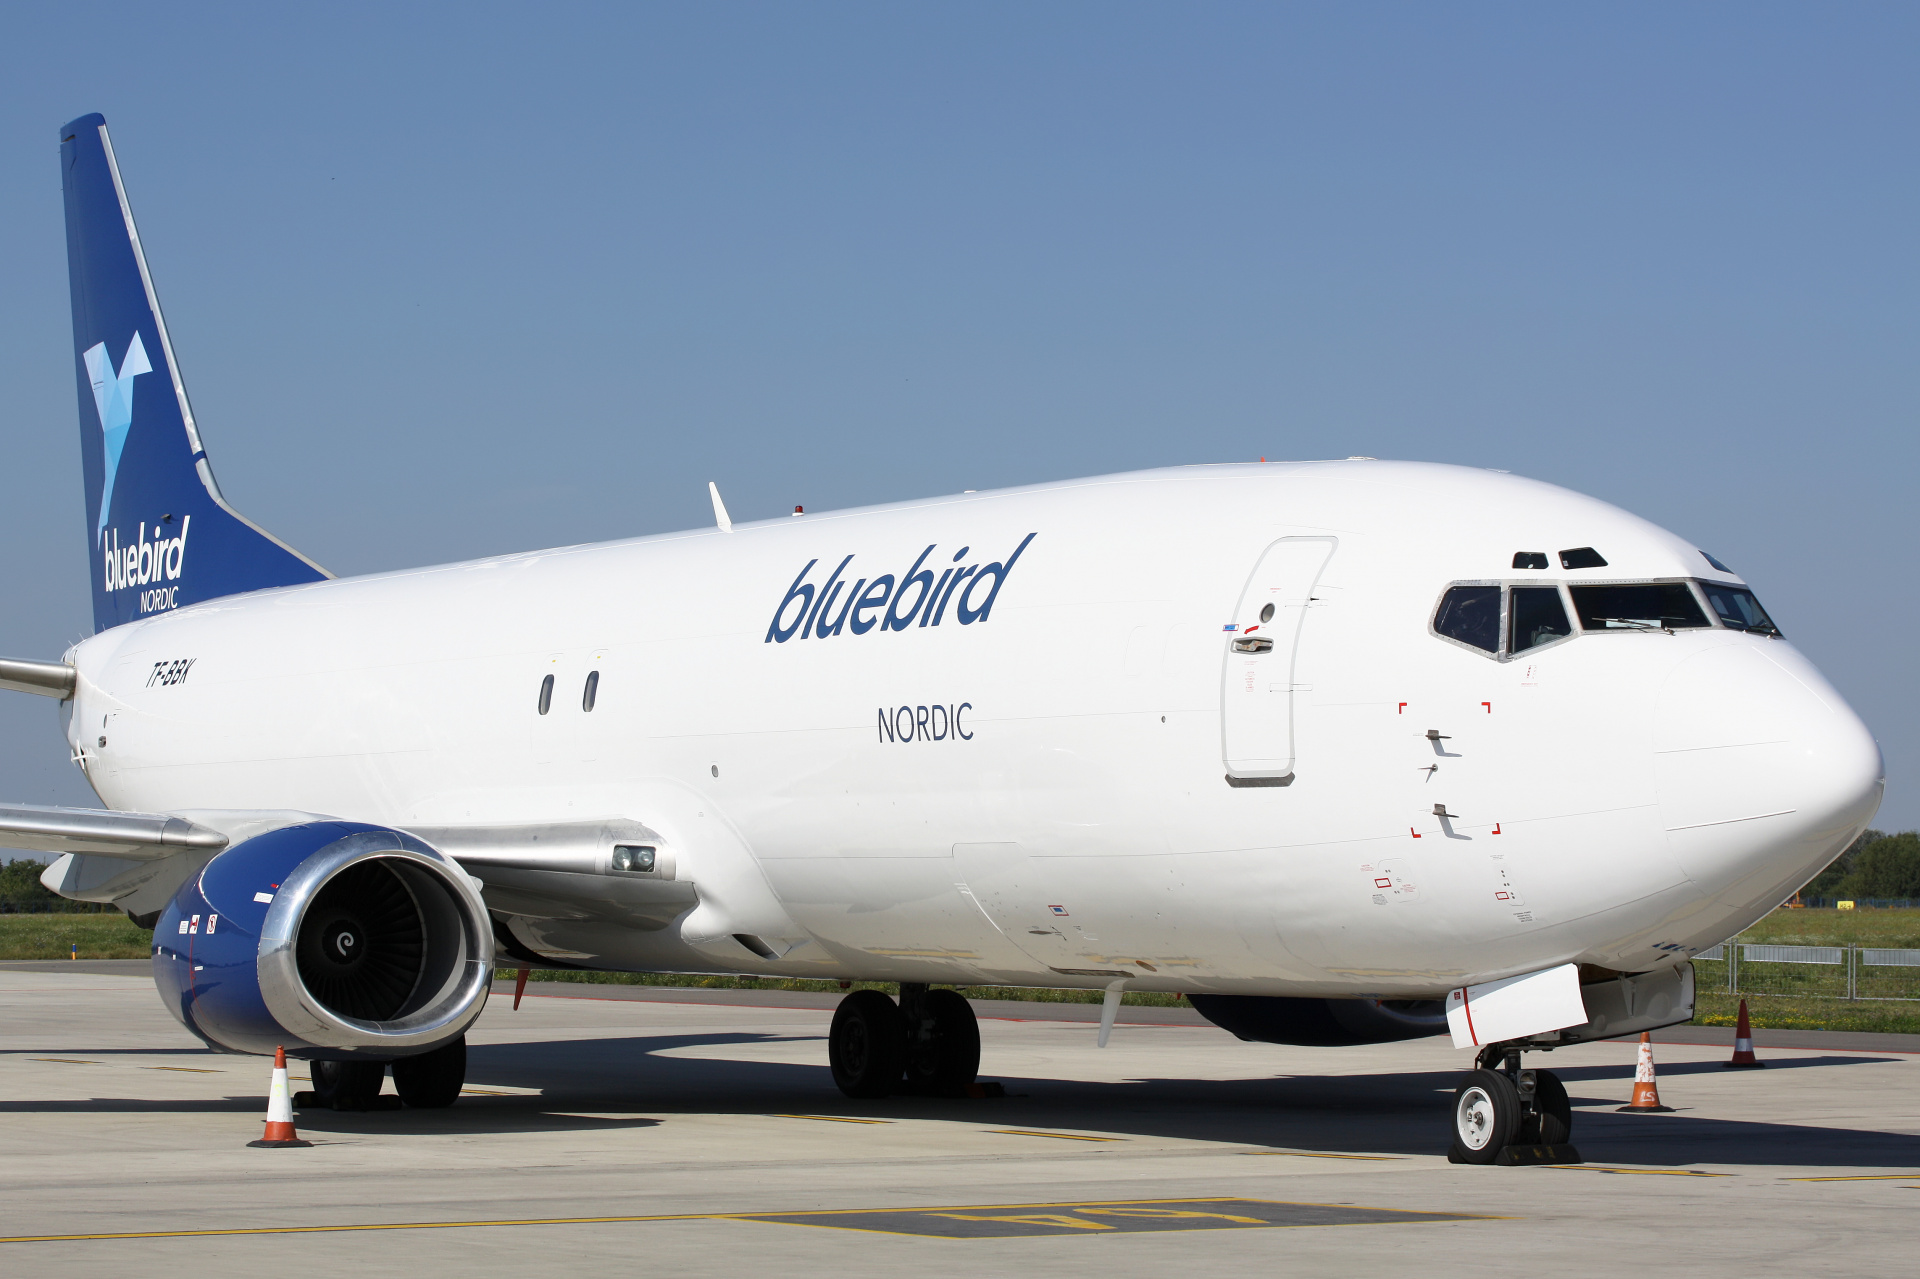 SF, TF-BBK, Bluebird Nordic (Aircraft » EPWA Spotting » Boeing 737-400F)